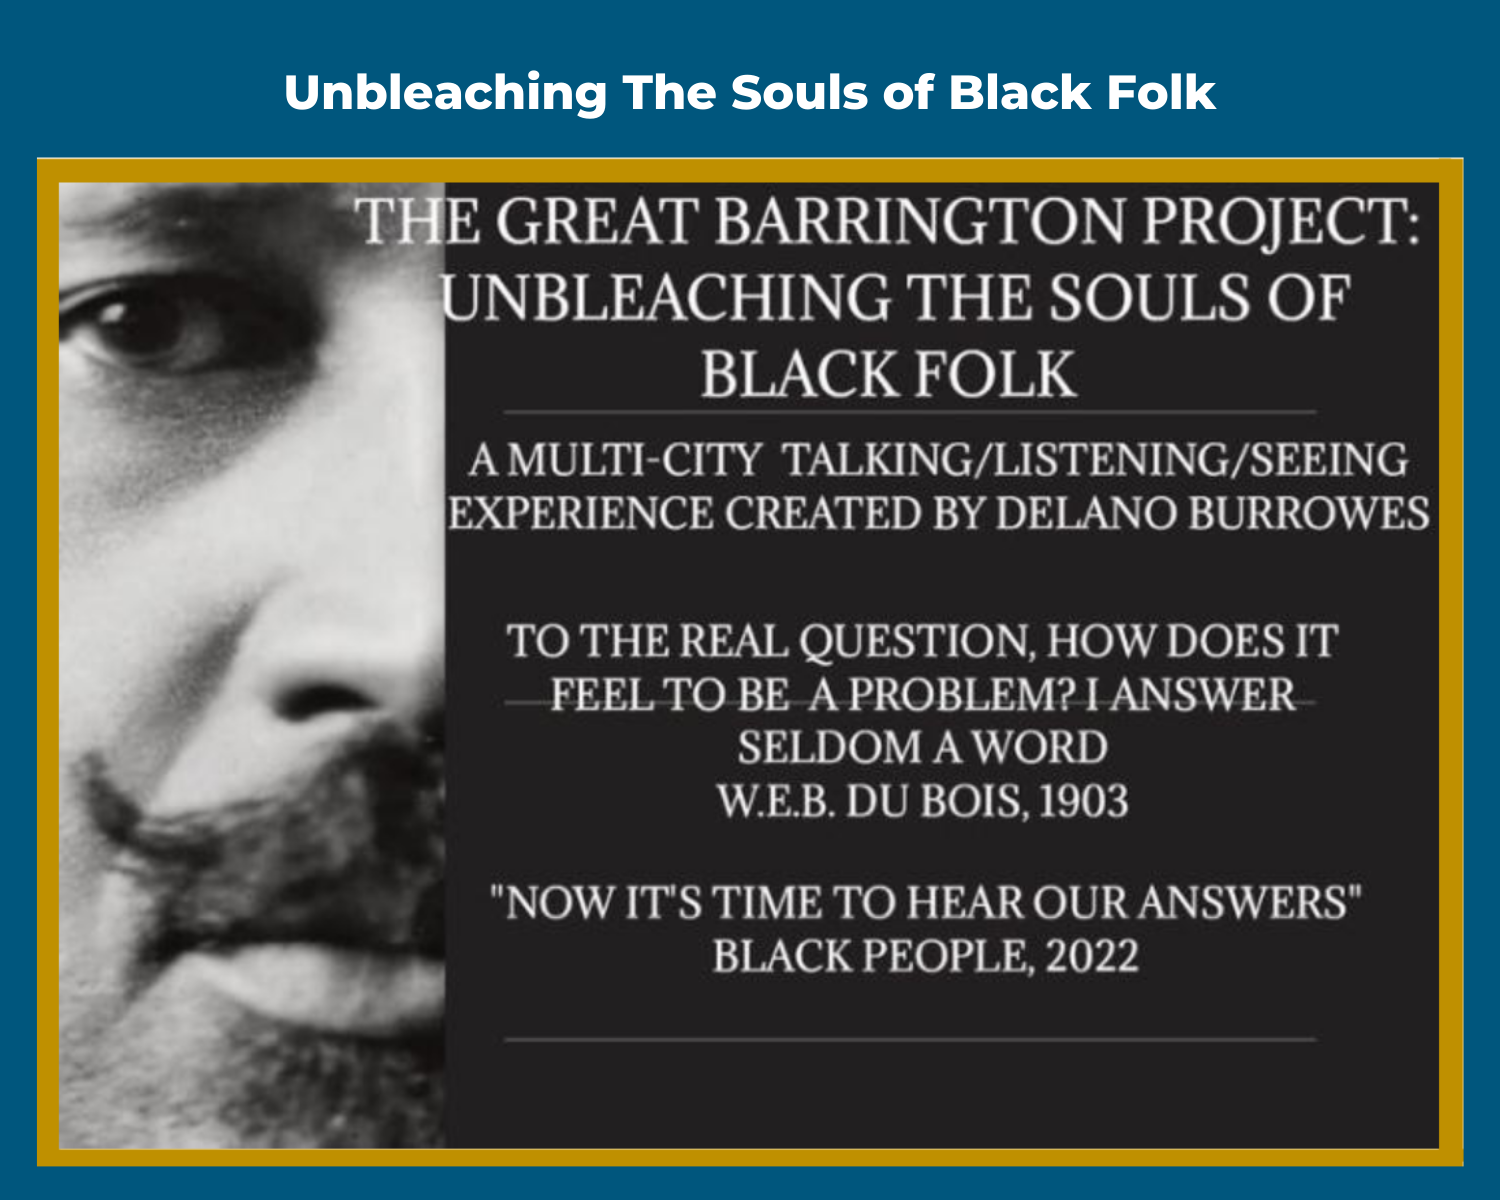 The Great Barrington Project: Unbleaching The Souls of Black Folk